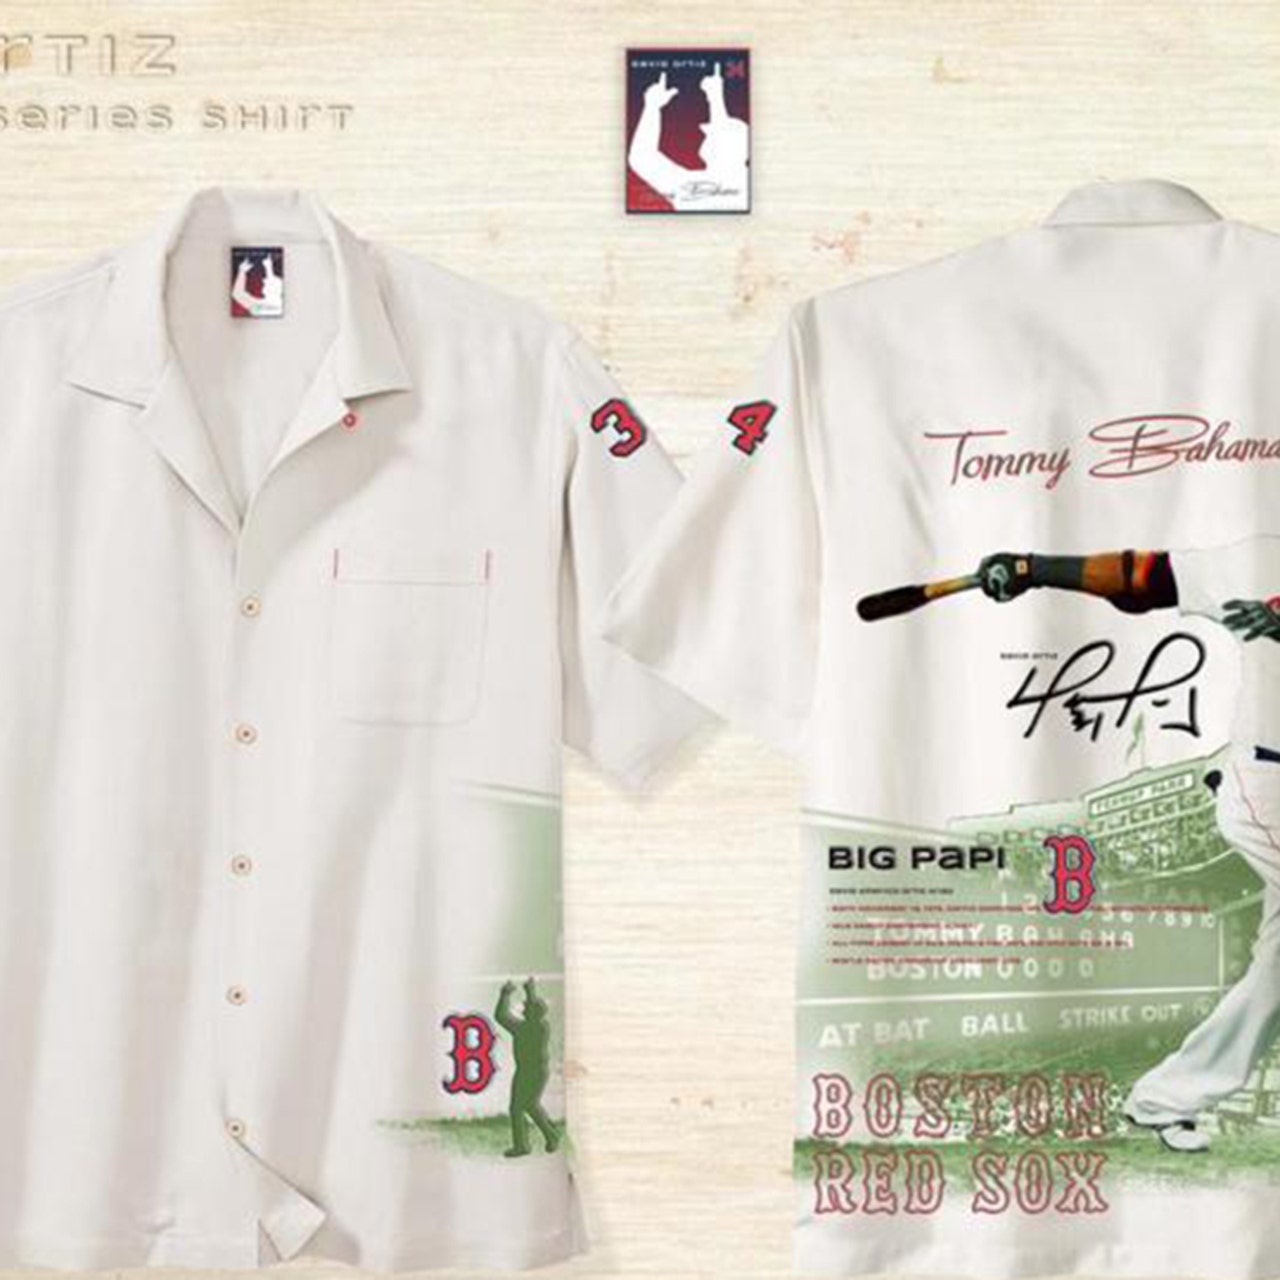 Tommy Bahama Minnesota Twins MLB Fan Shop